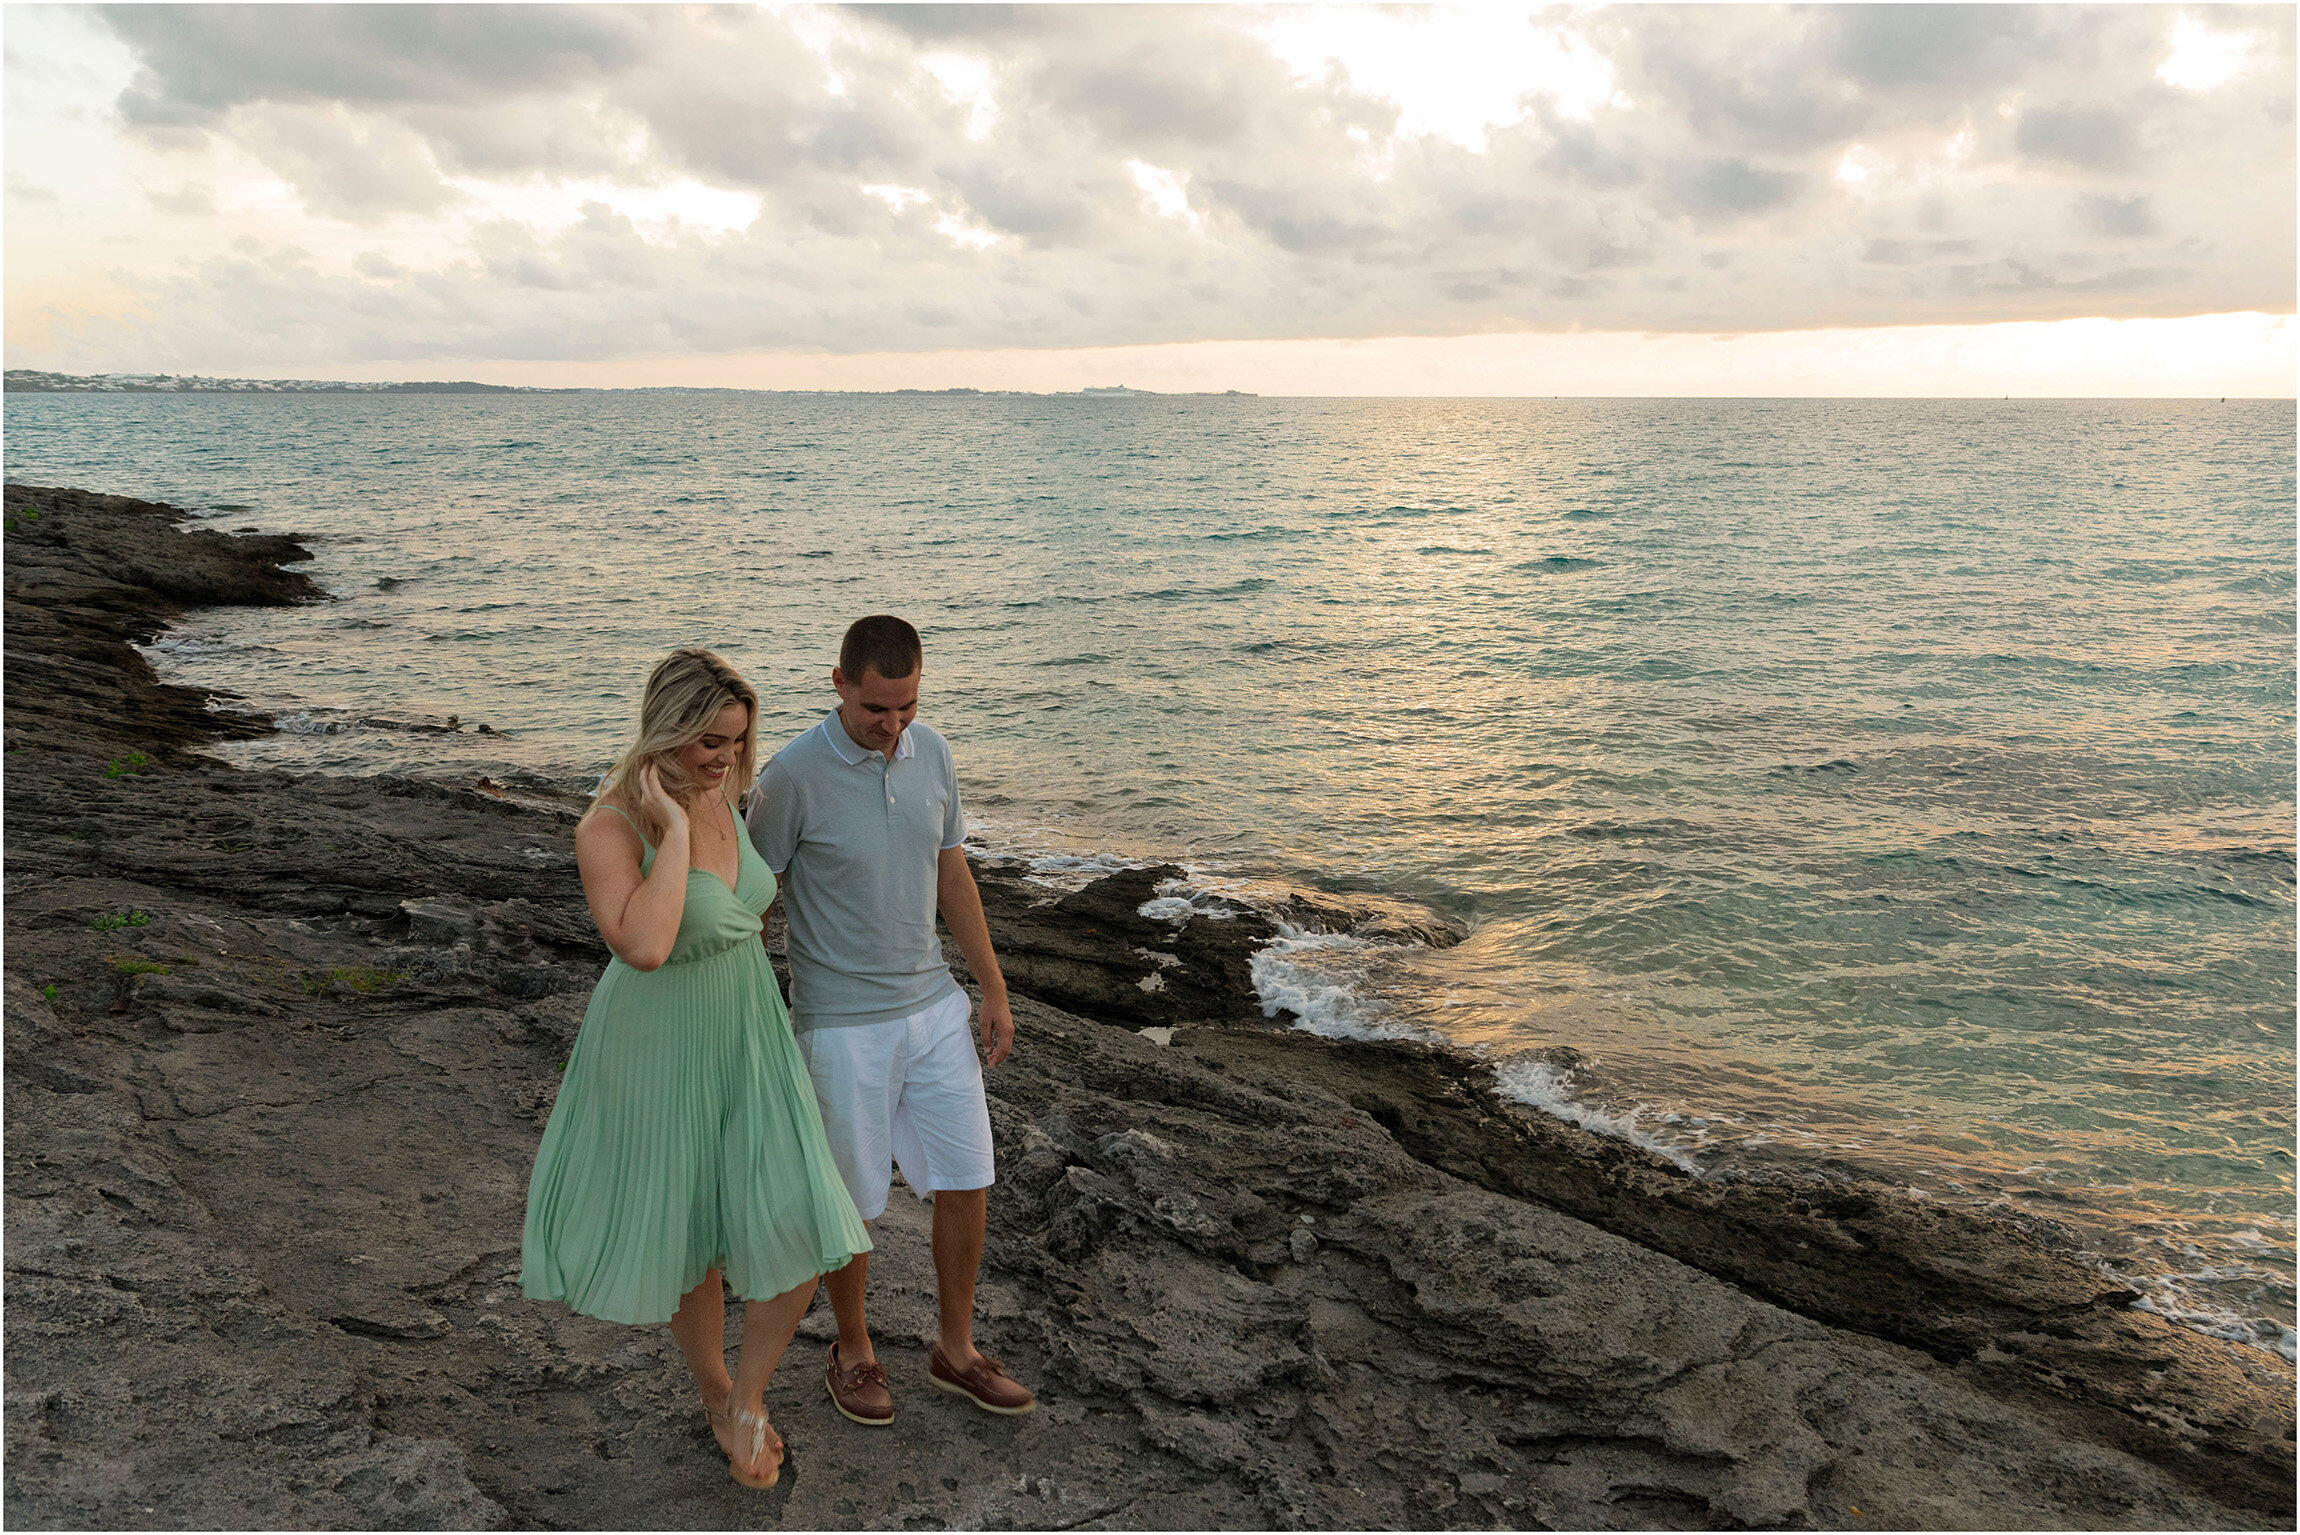 ©FianderFoto_Bermuda Engagement Photos_Shelly Bay Beach_Annilee_Kevin_013.jpg